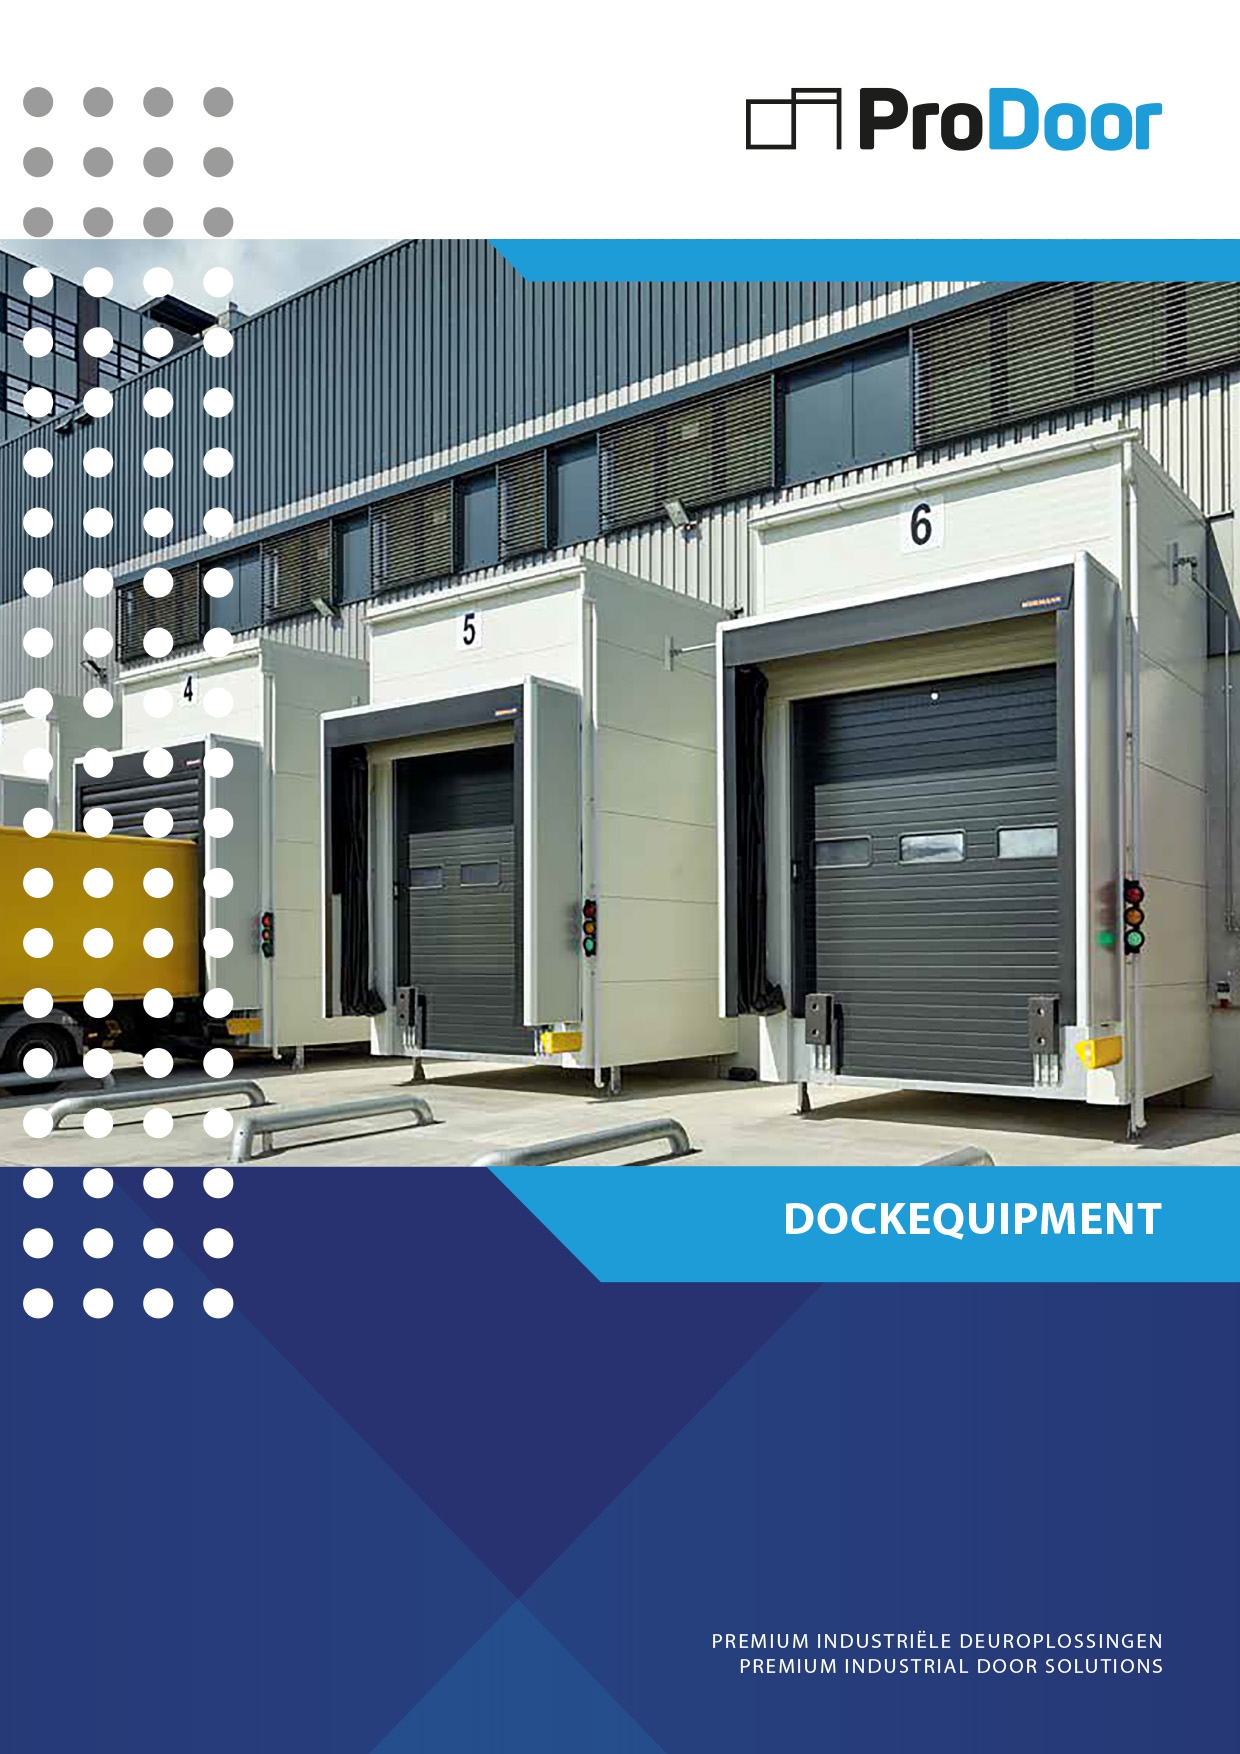 2108_new-prodoor-productbrochure-dockequipment-hormann-50dpi_detailpagina_20210514212026.jpg